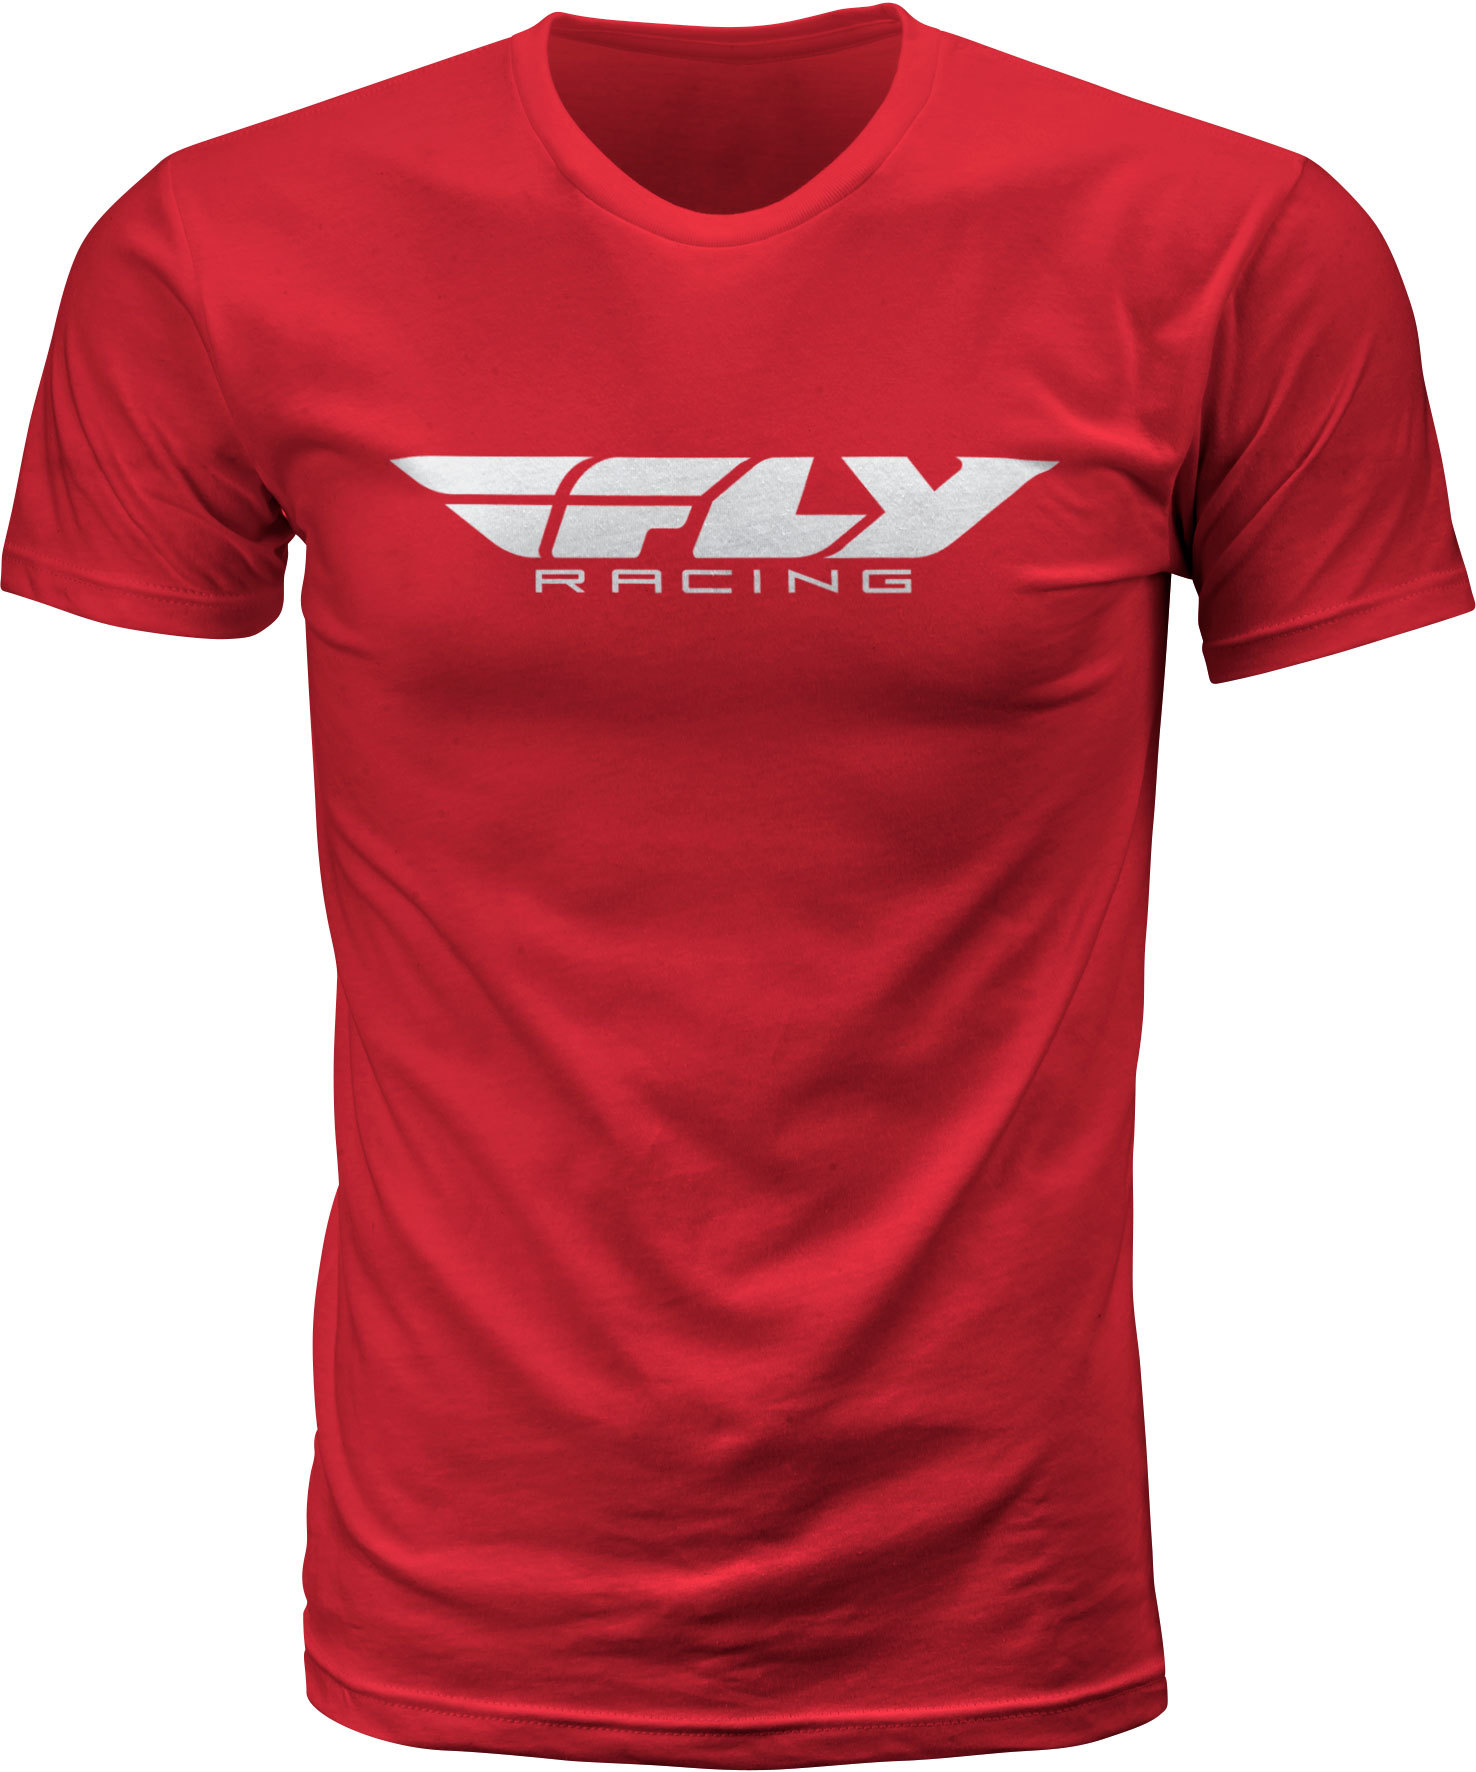 Fly Racing - Fly Corporate Tee Grey Ys Grey Ys - 352-0942X